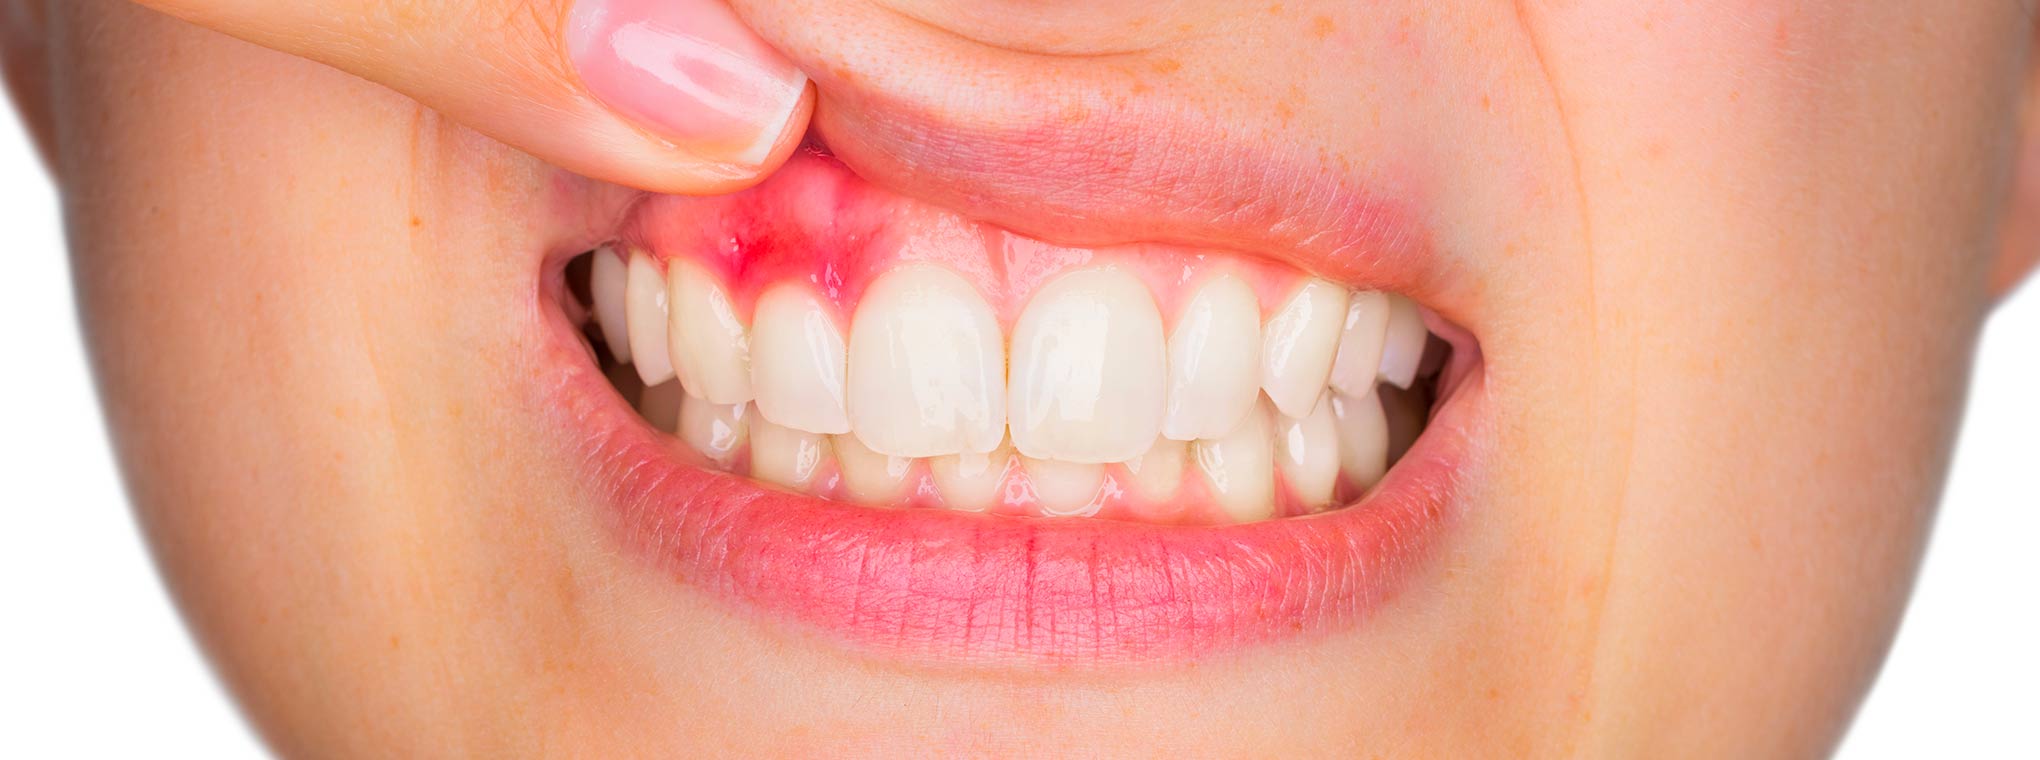 Garda Odontoiatria | Parodontologia